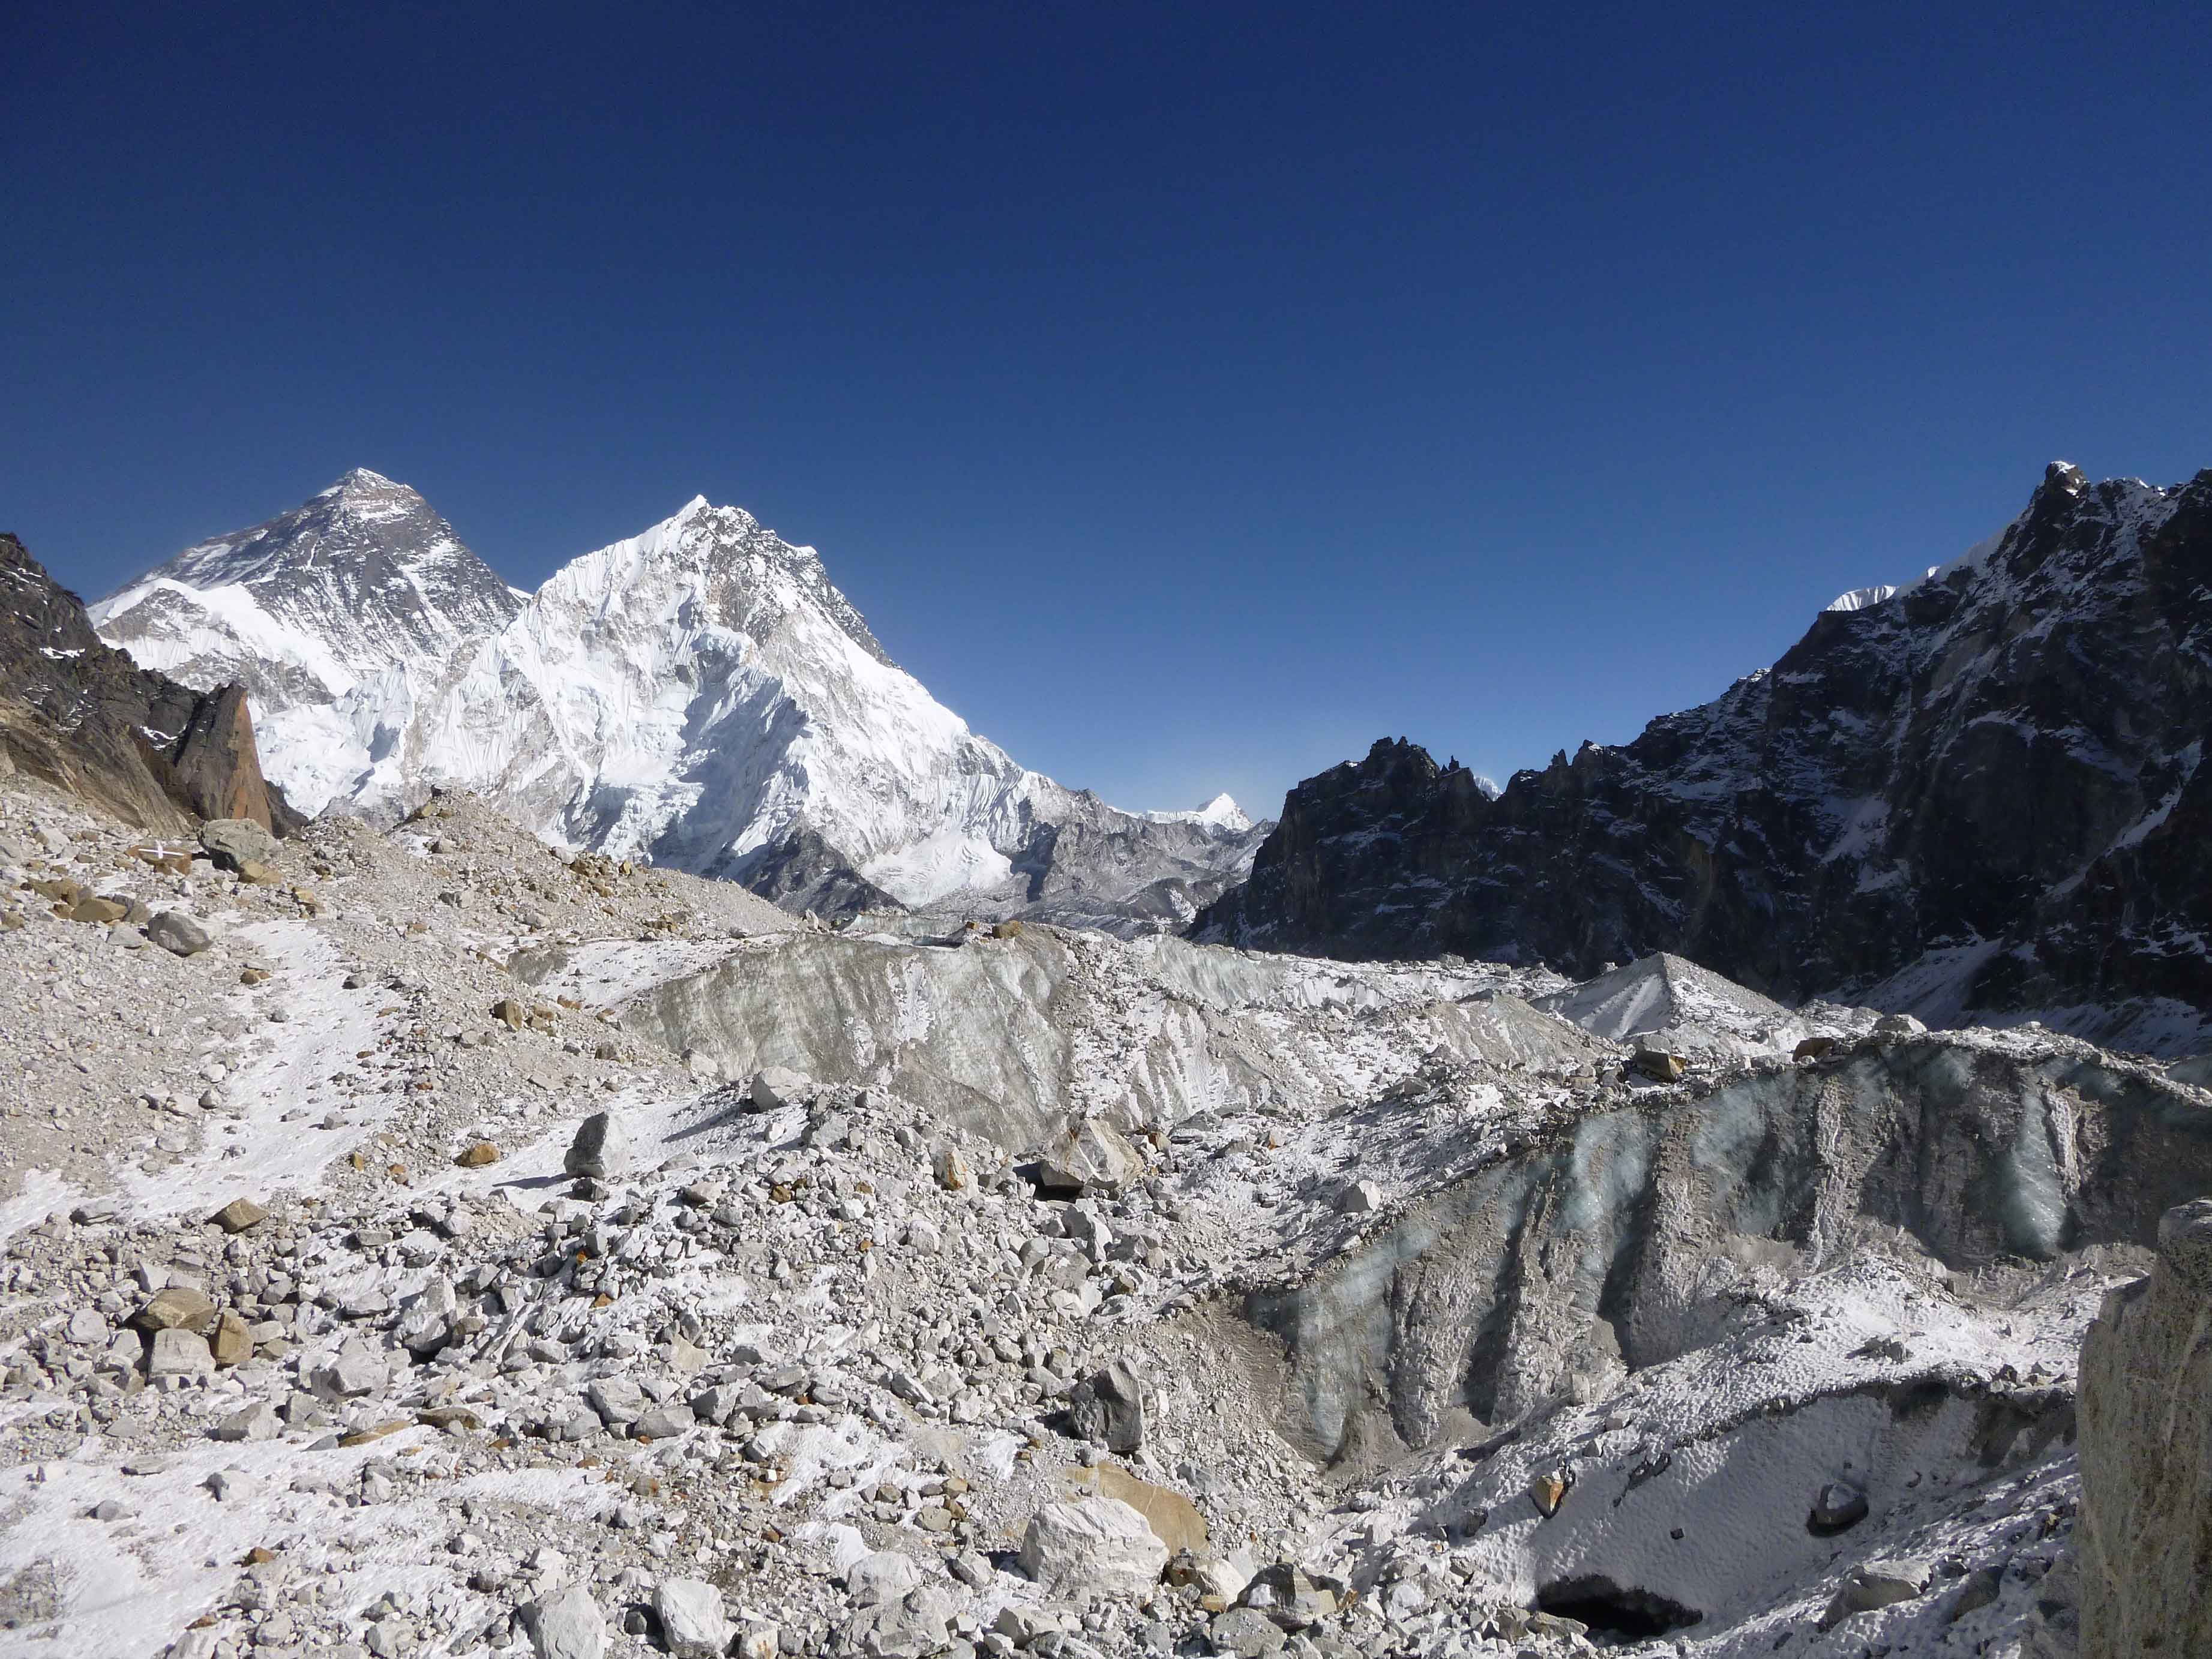 The Changri Nup Glacier near Mt. Everest.